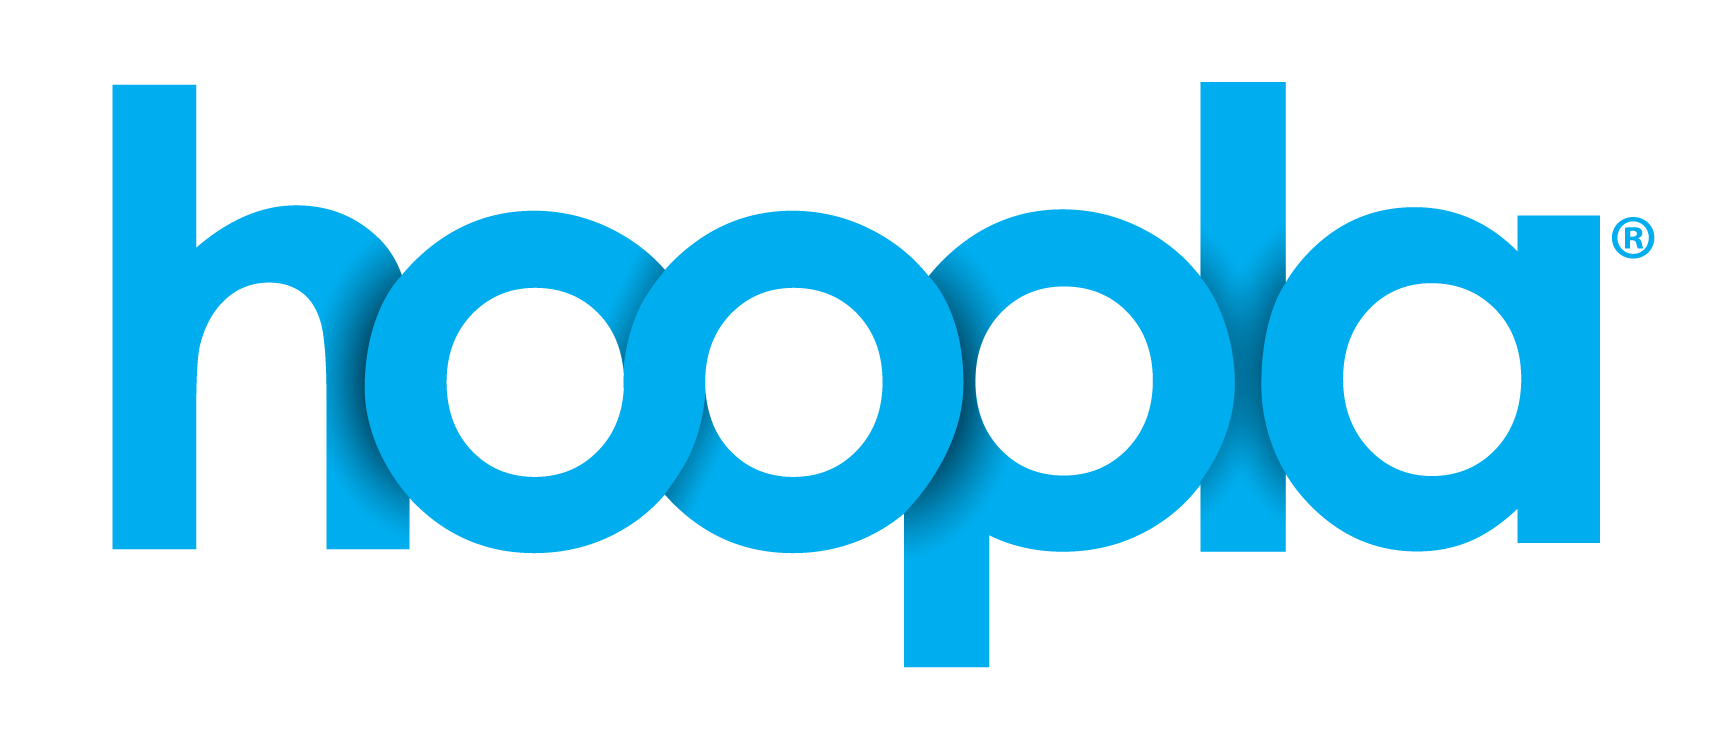 Hoopla logo. Click for audiobooks!